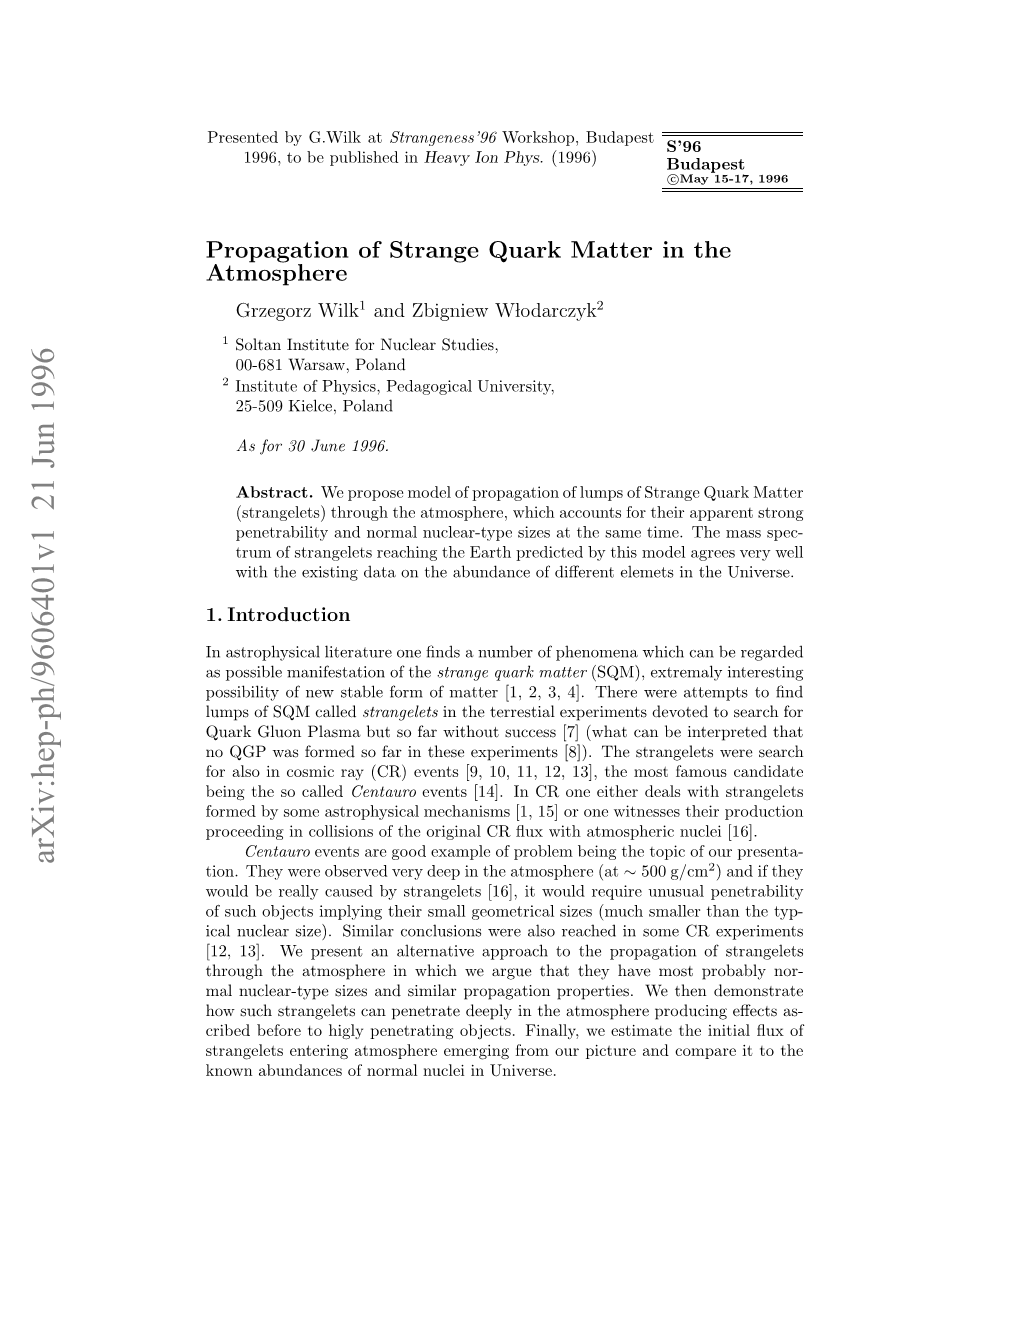 Propagation of Strange Quark Matter in the Atmosphere